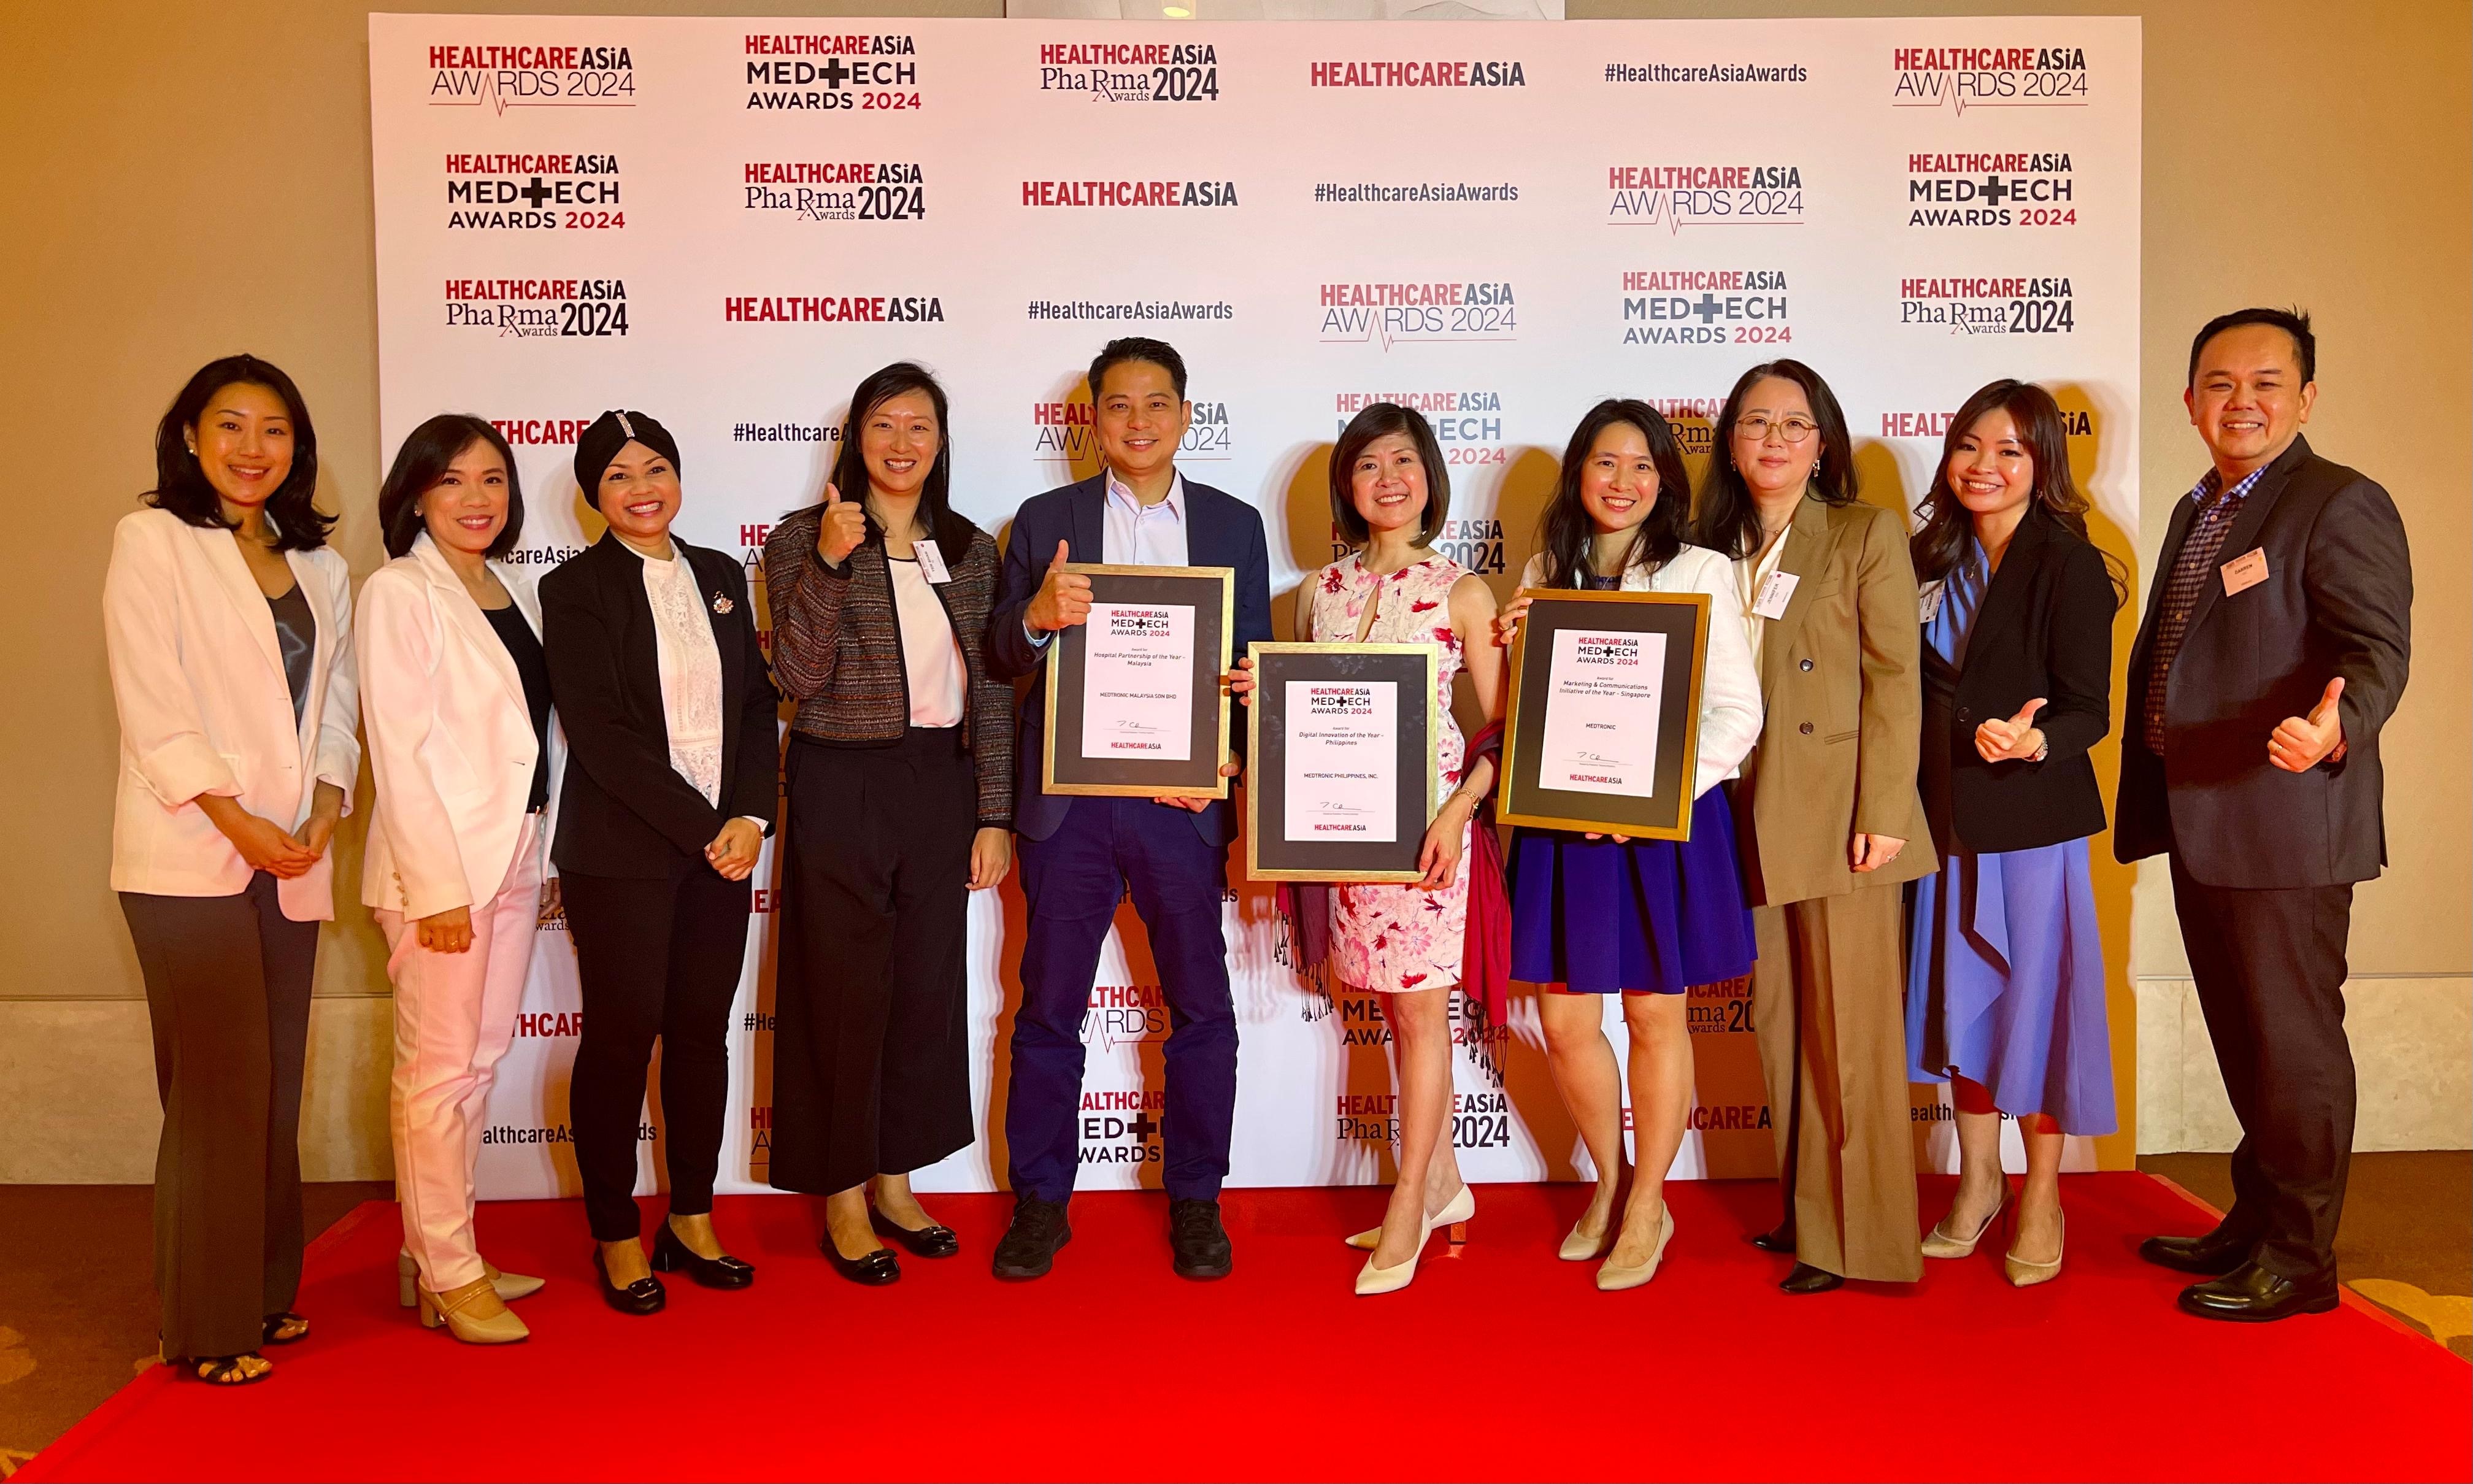 Medtronic at Healthcare Asia Medtech Awards 2024